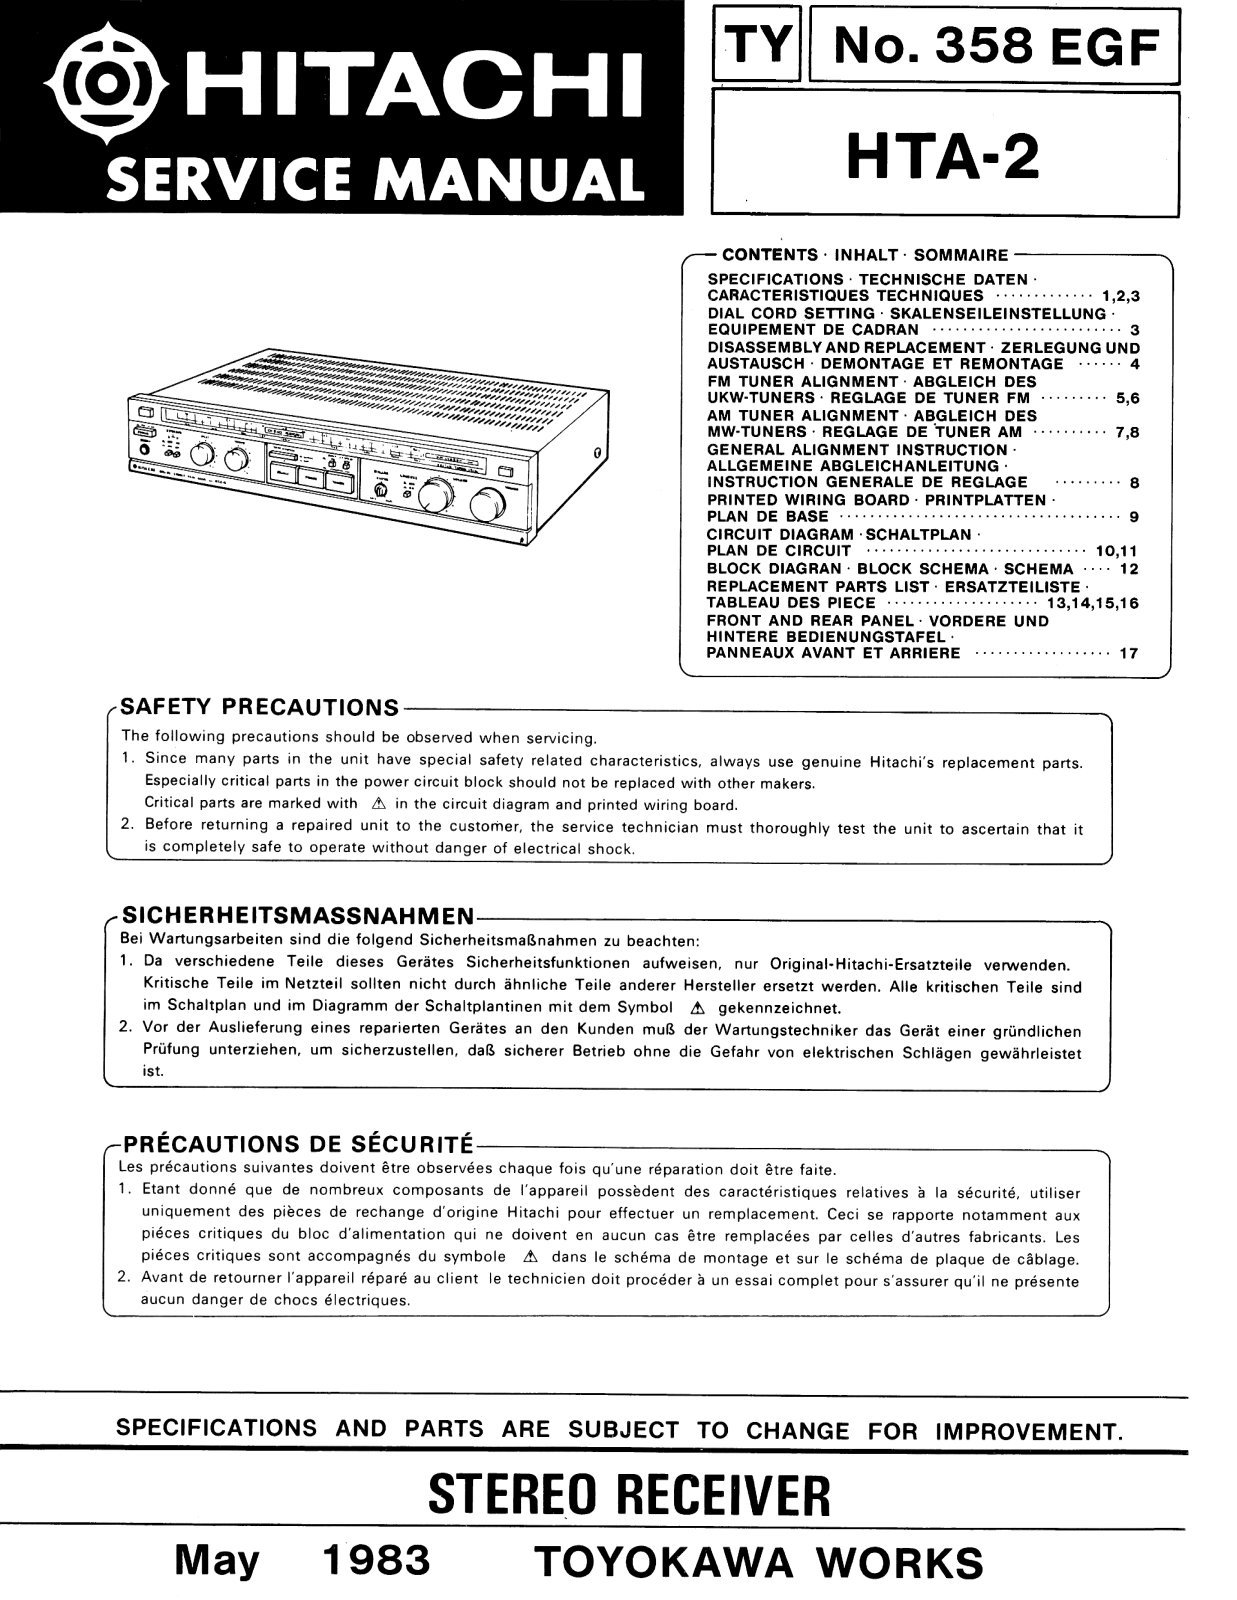 Hitachi HT-A2 Service Manual